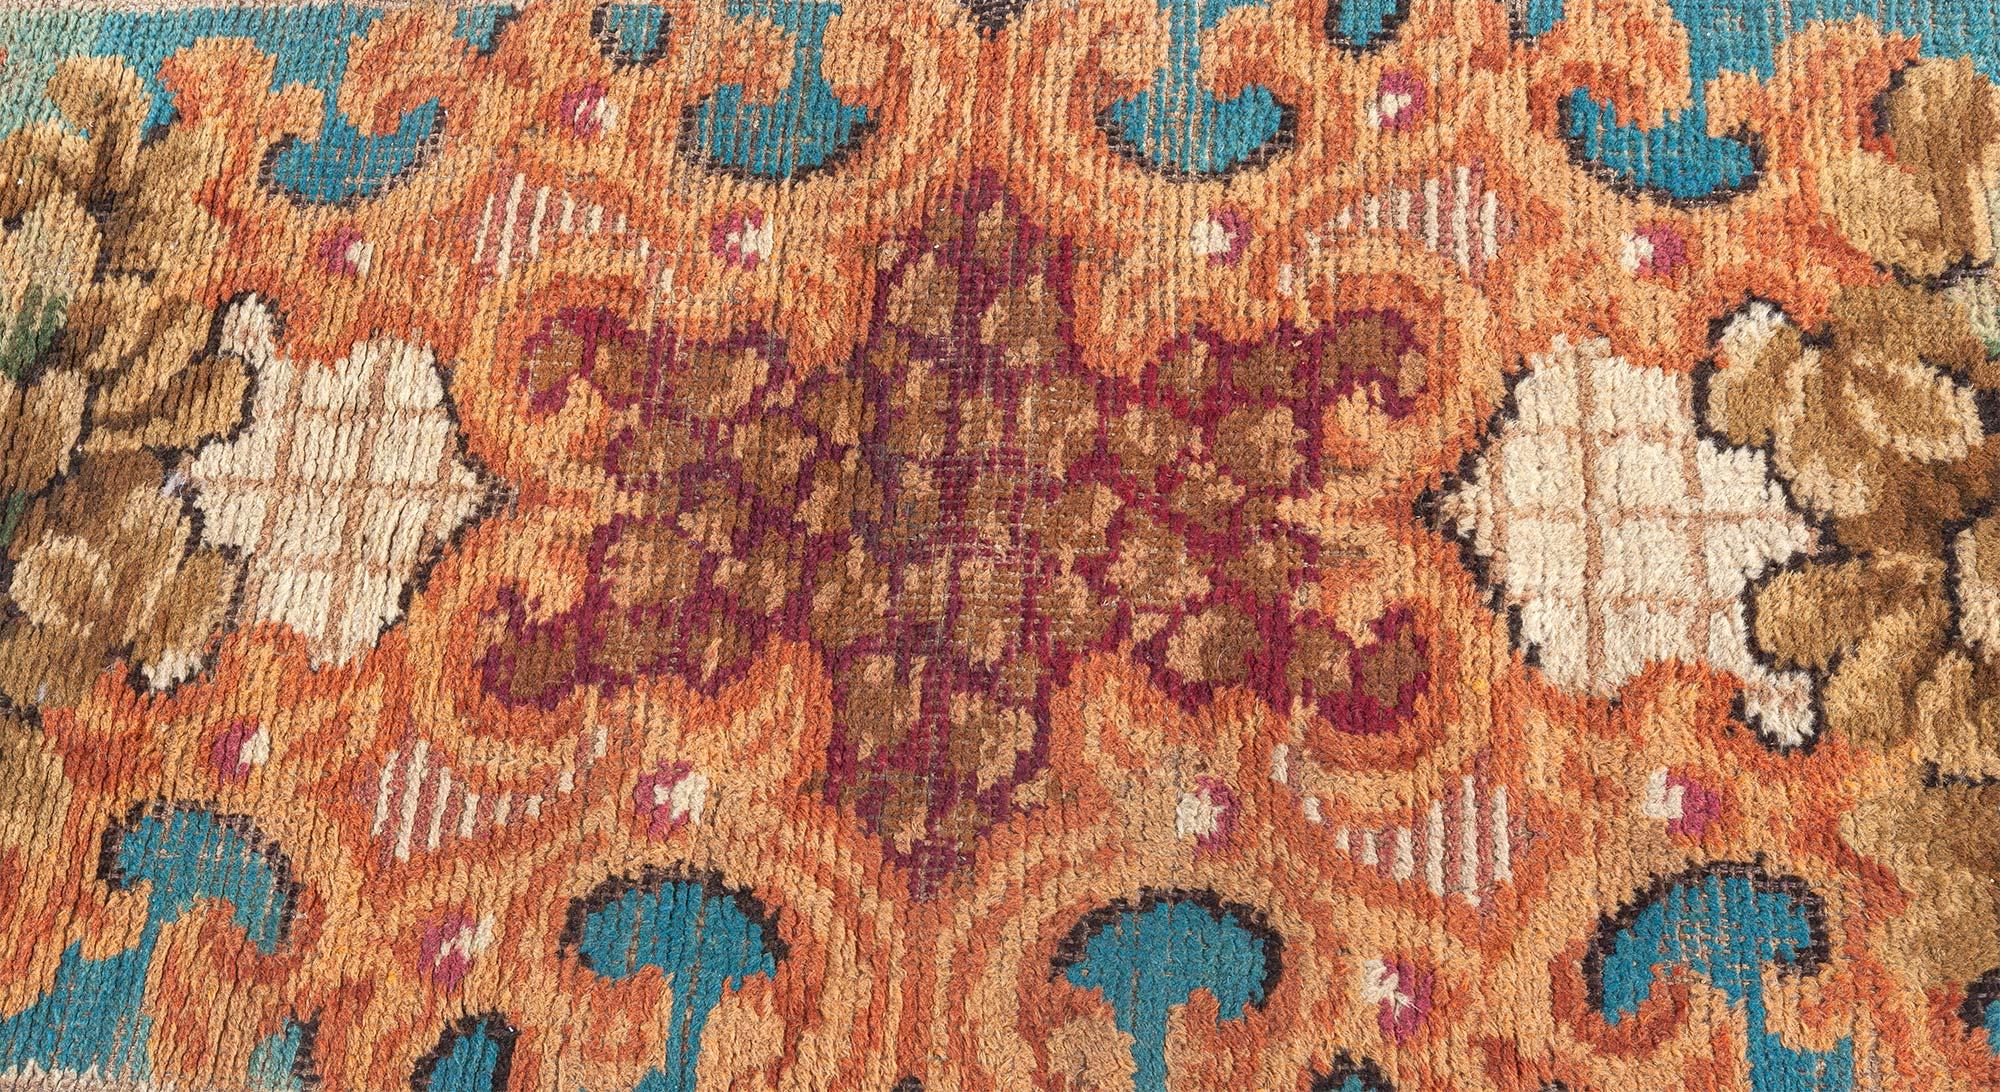 Antique European fragment botanic handmade wool rug
Size: 2'4